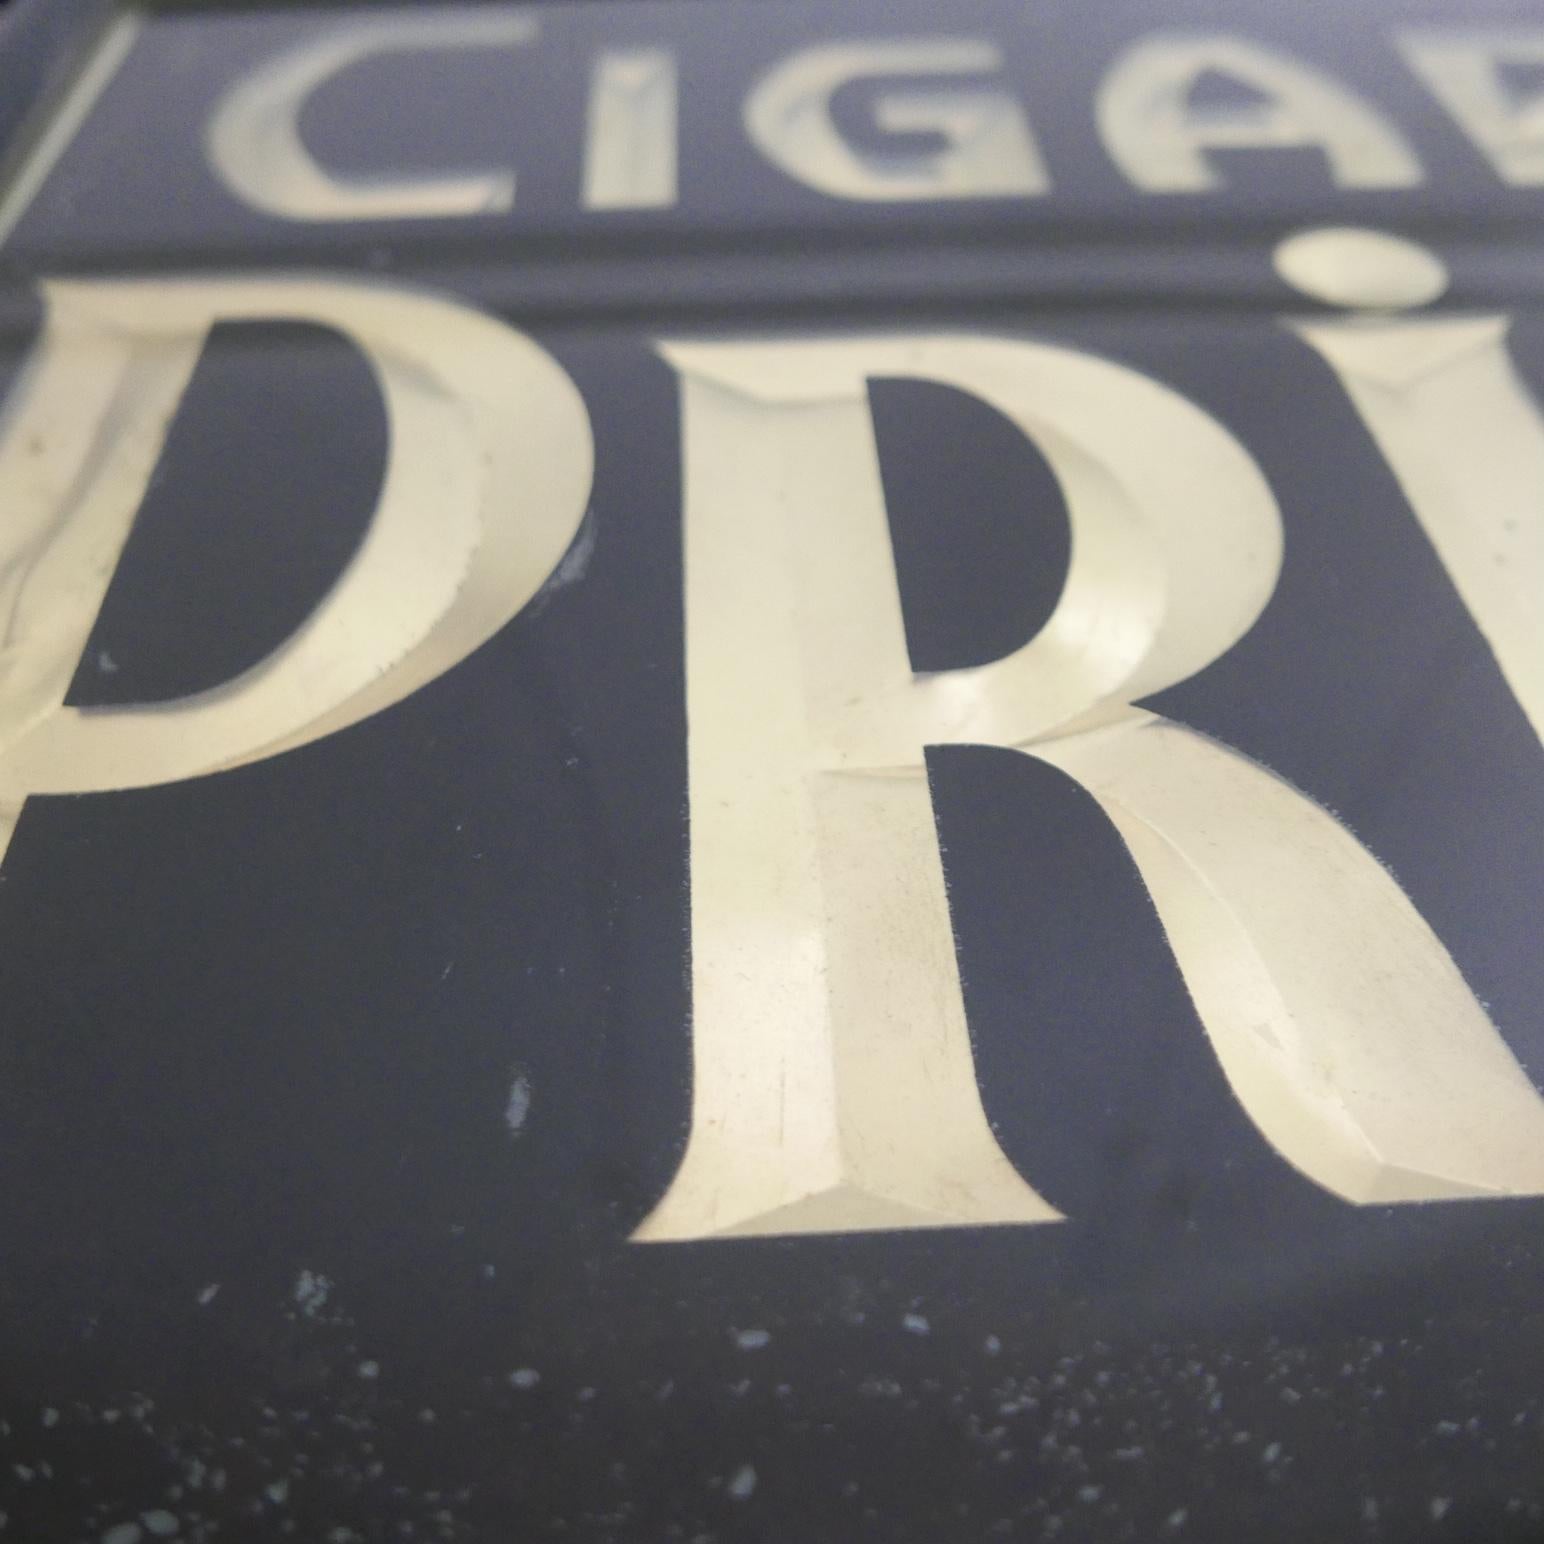 vintage cigar signs